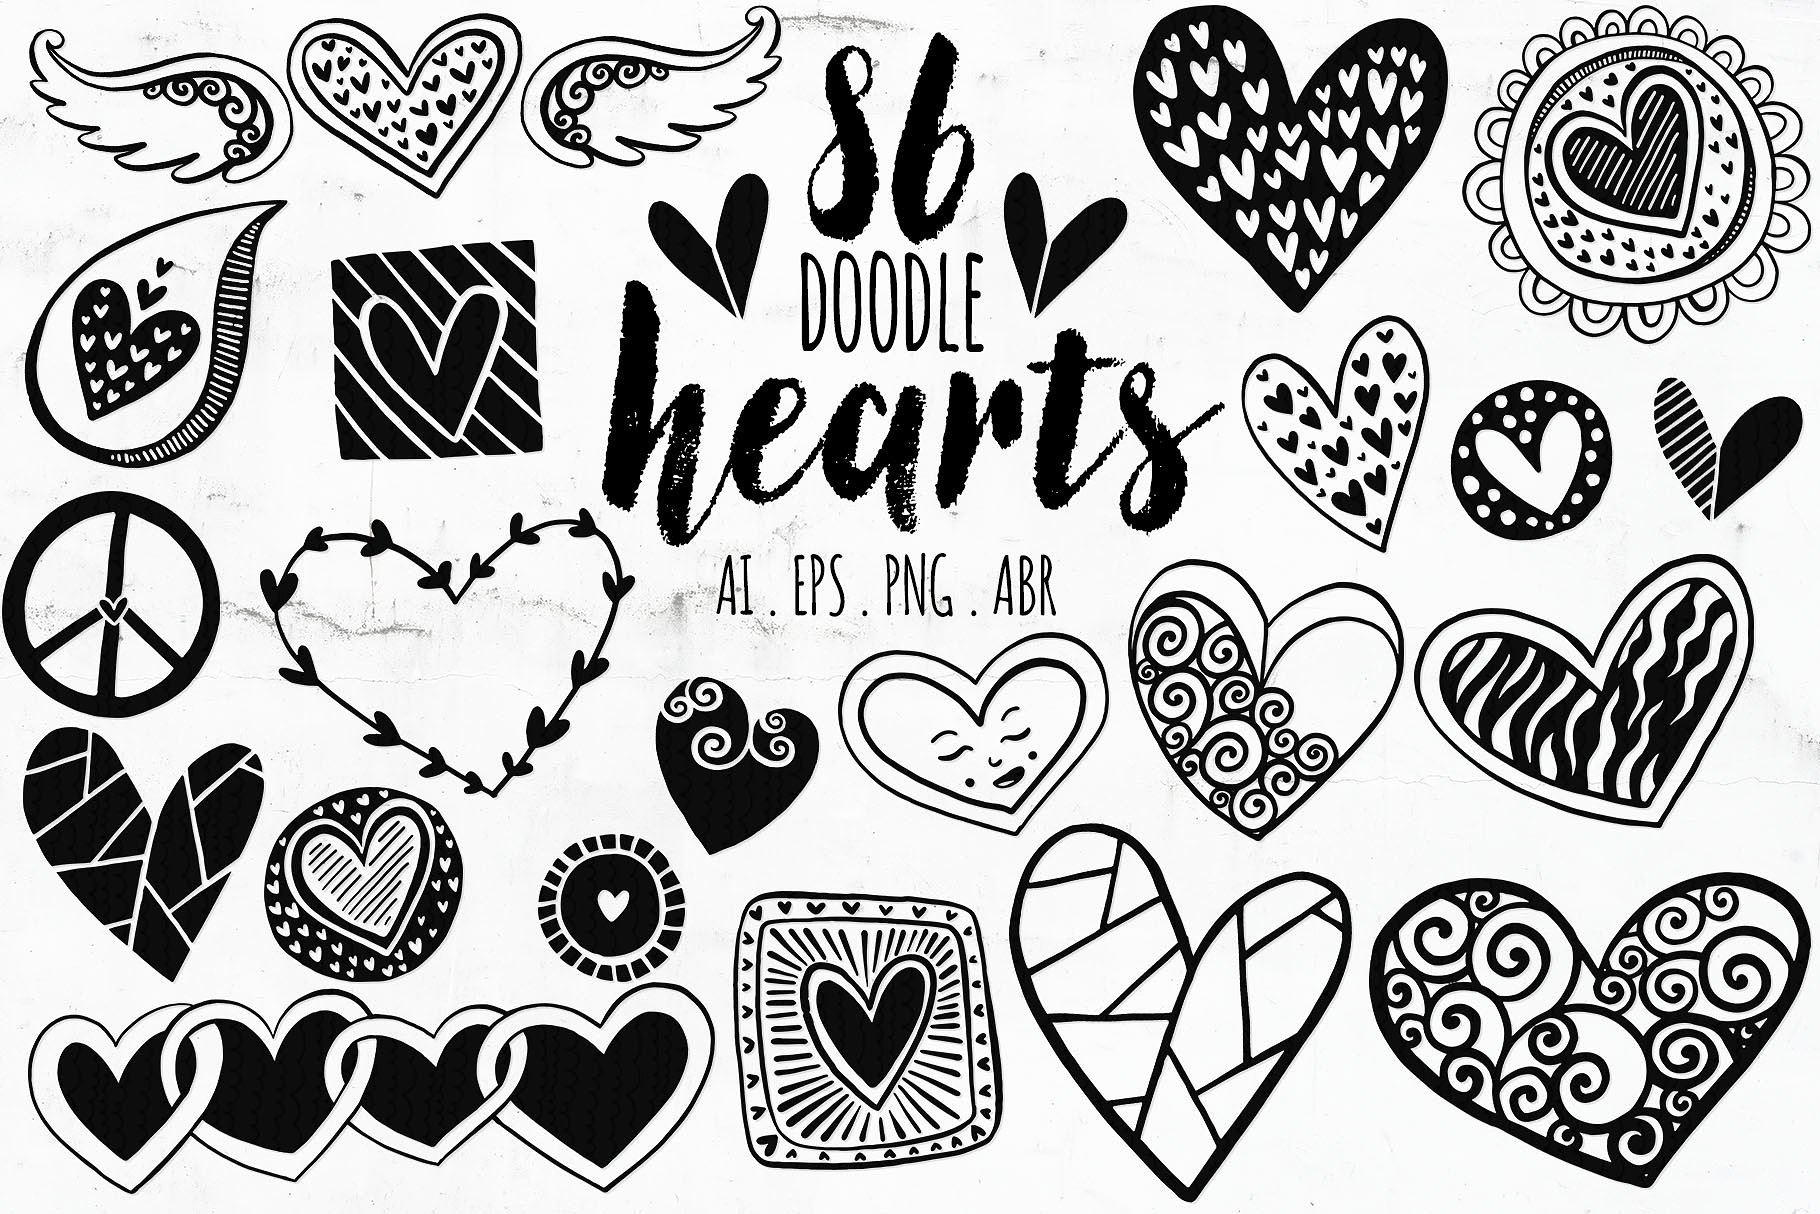 心形涂鸦图形&PS笔刷 Heart Doodles + Photoshop Brush插图